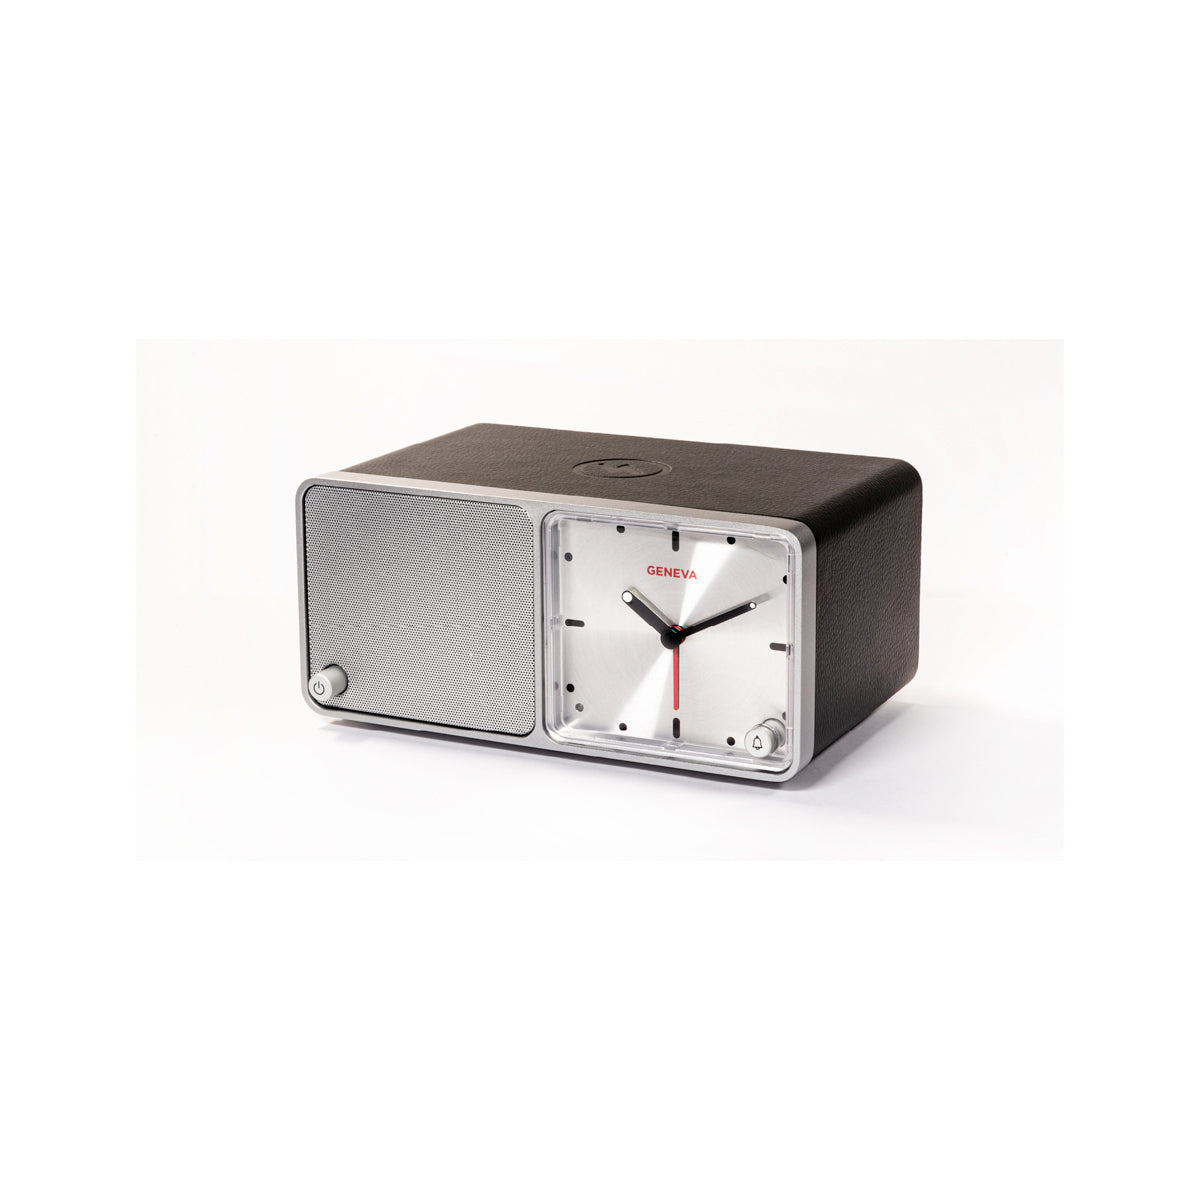 Geneva TIME Bluetooth speaker and clock - The Audio Experts